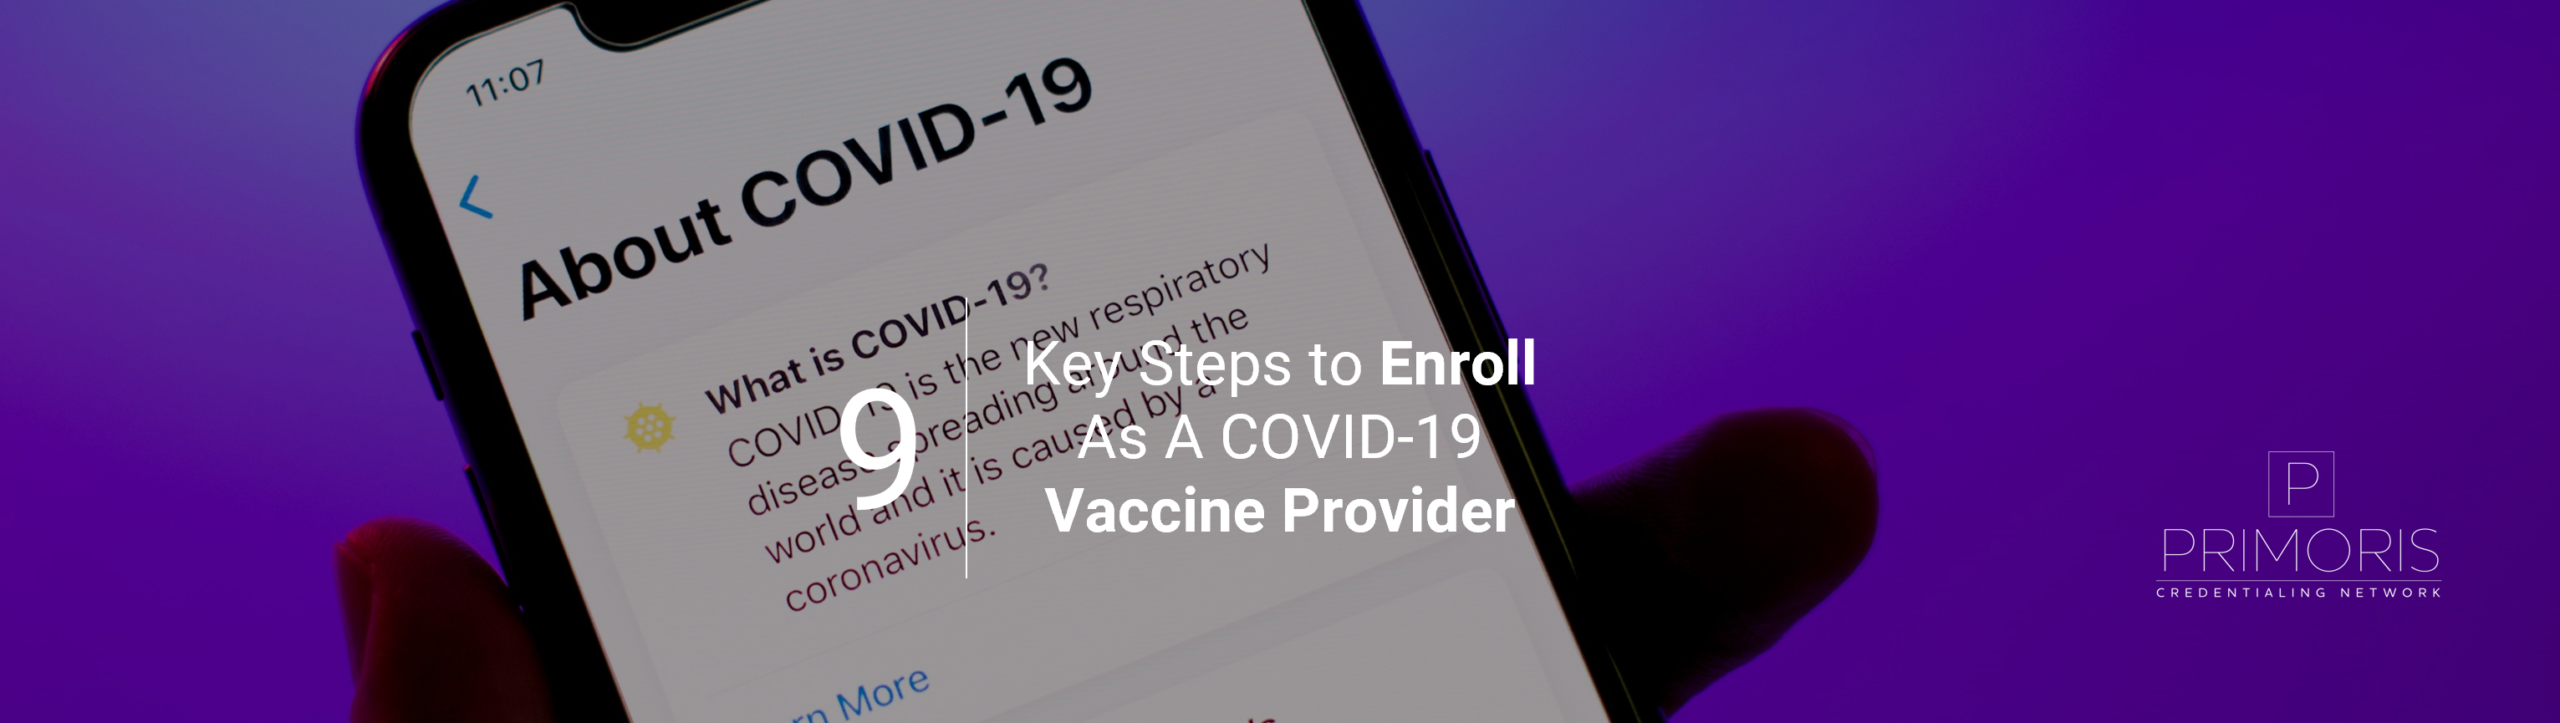 Key Steps To Become A COVID-19 Vaccine Provider